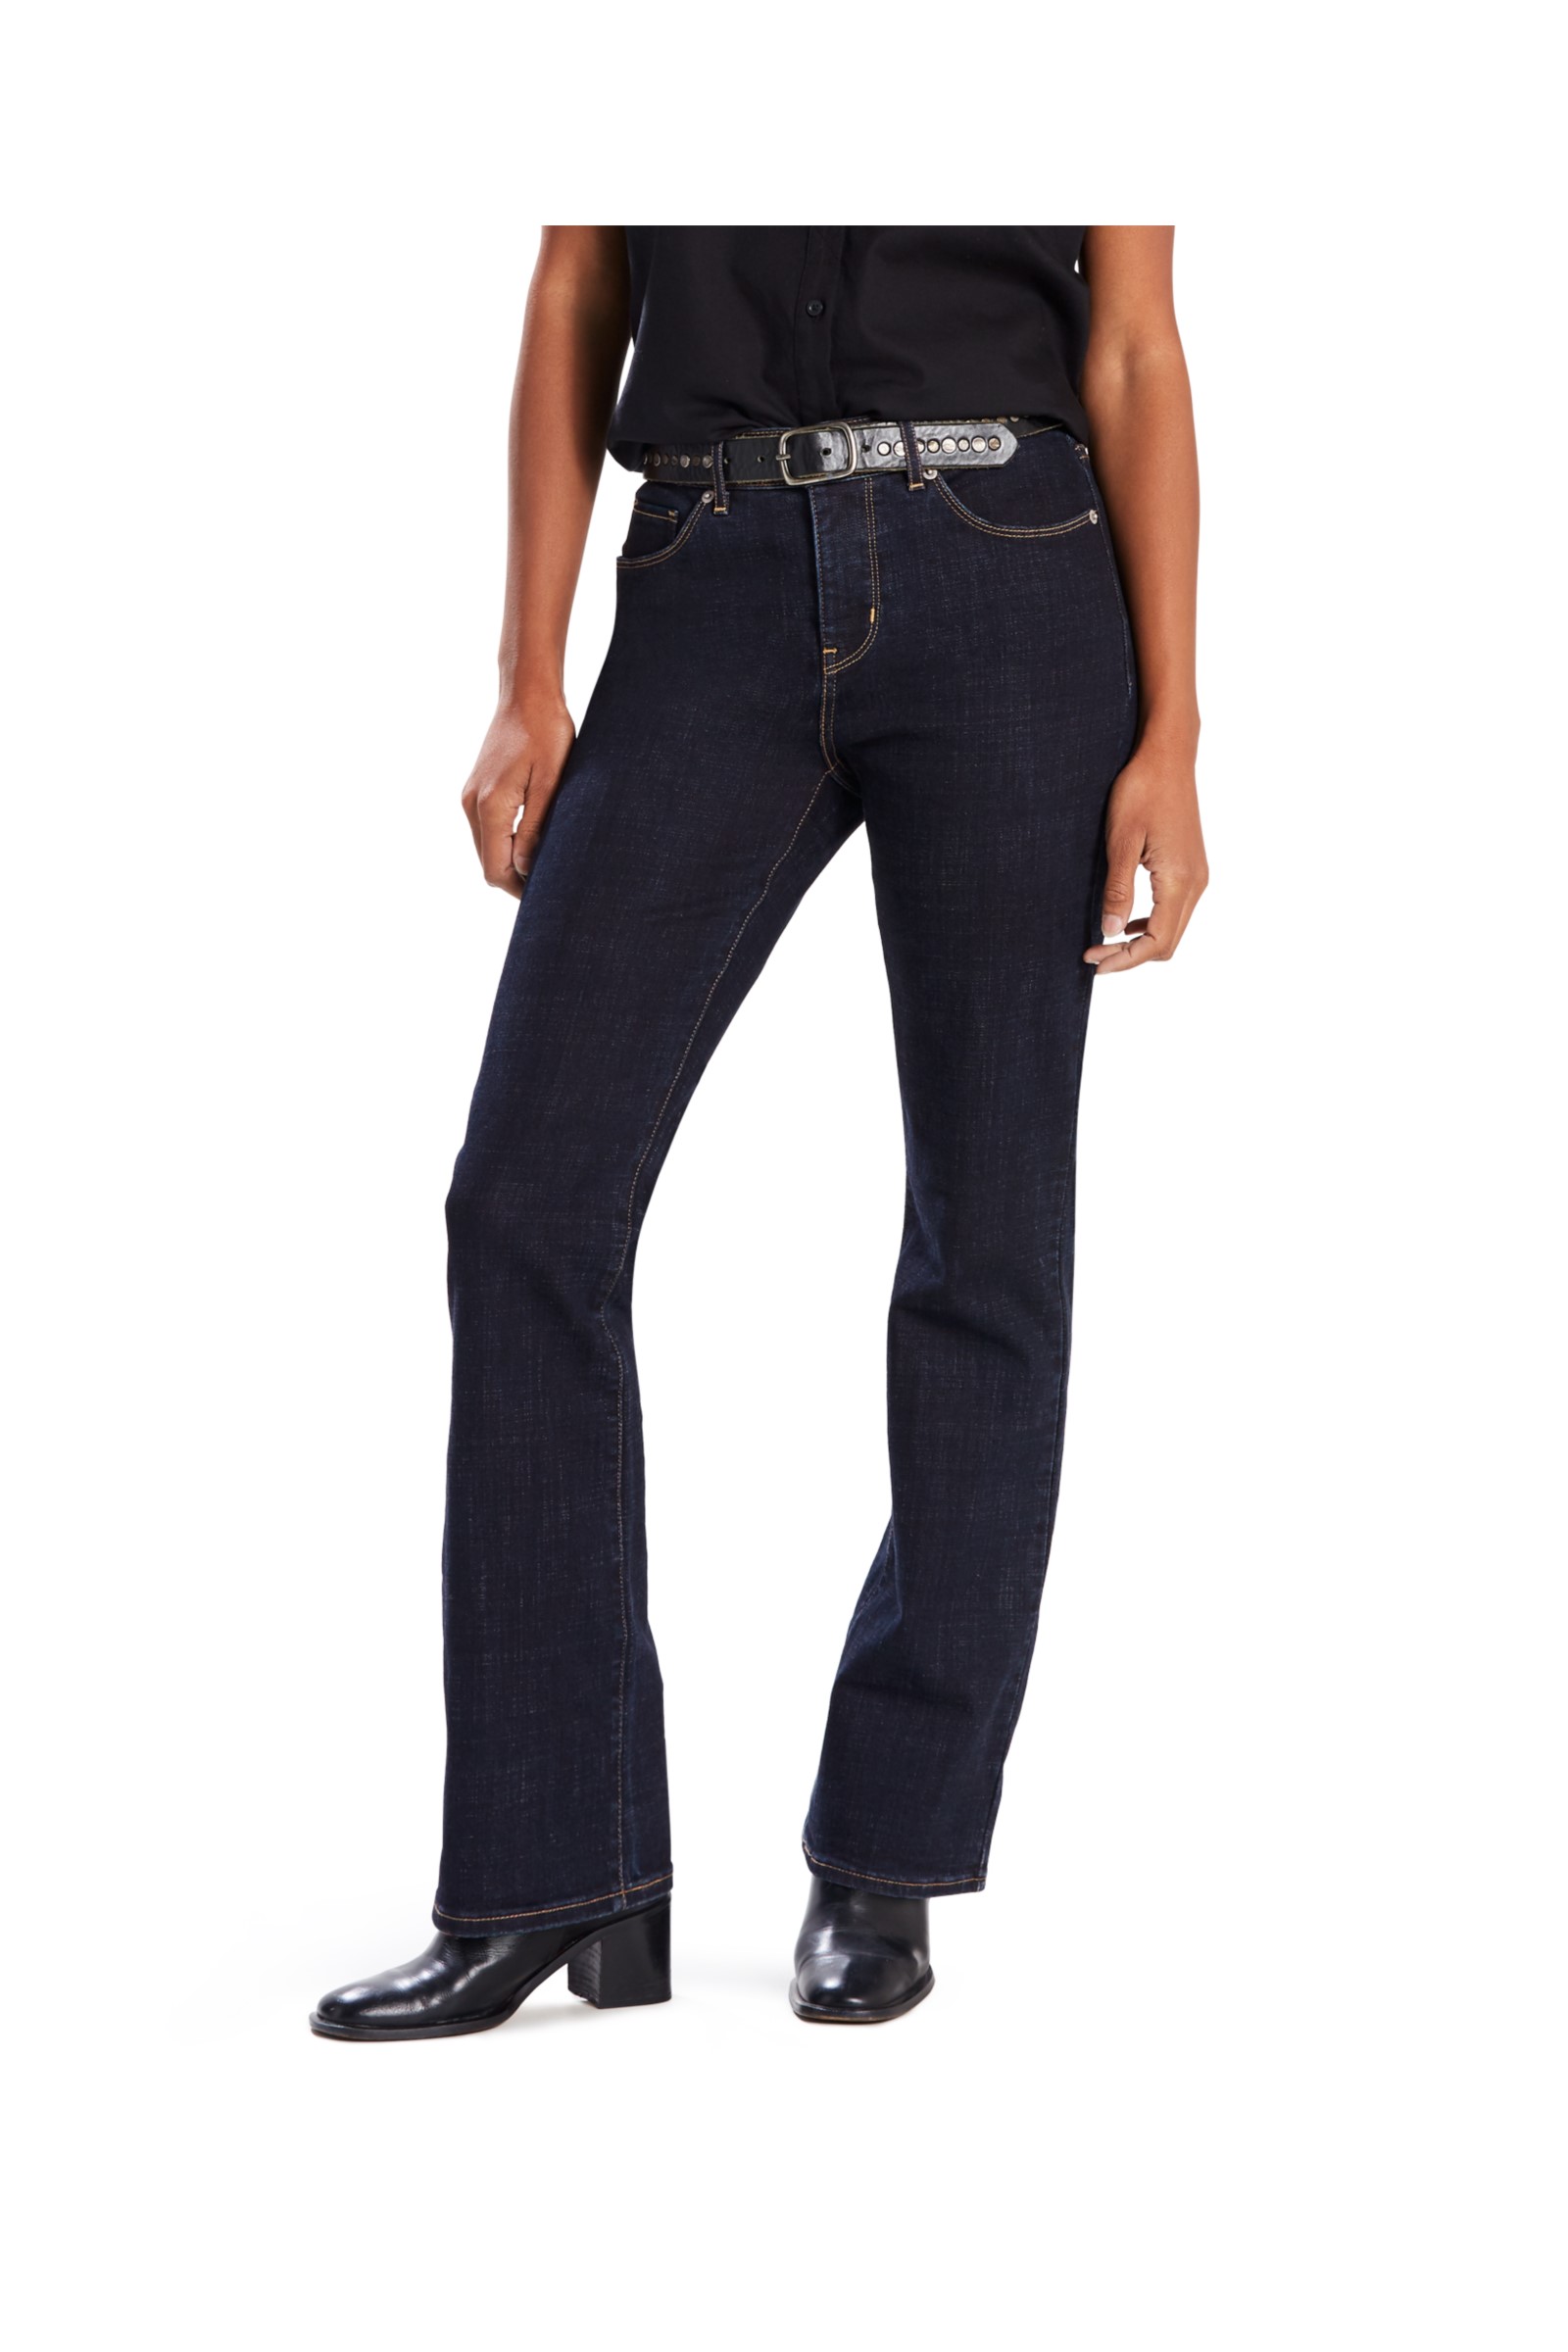 Levi's Classic Bootcut Women's Jeans